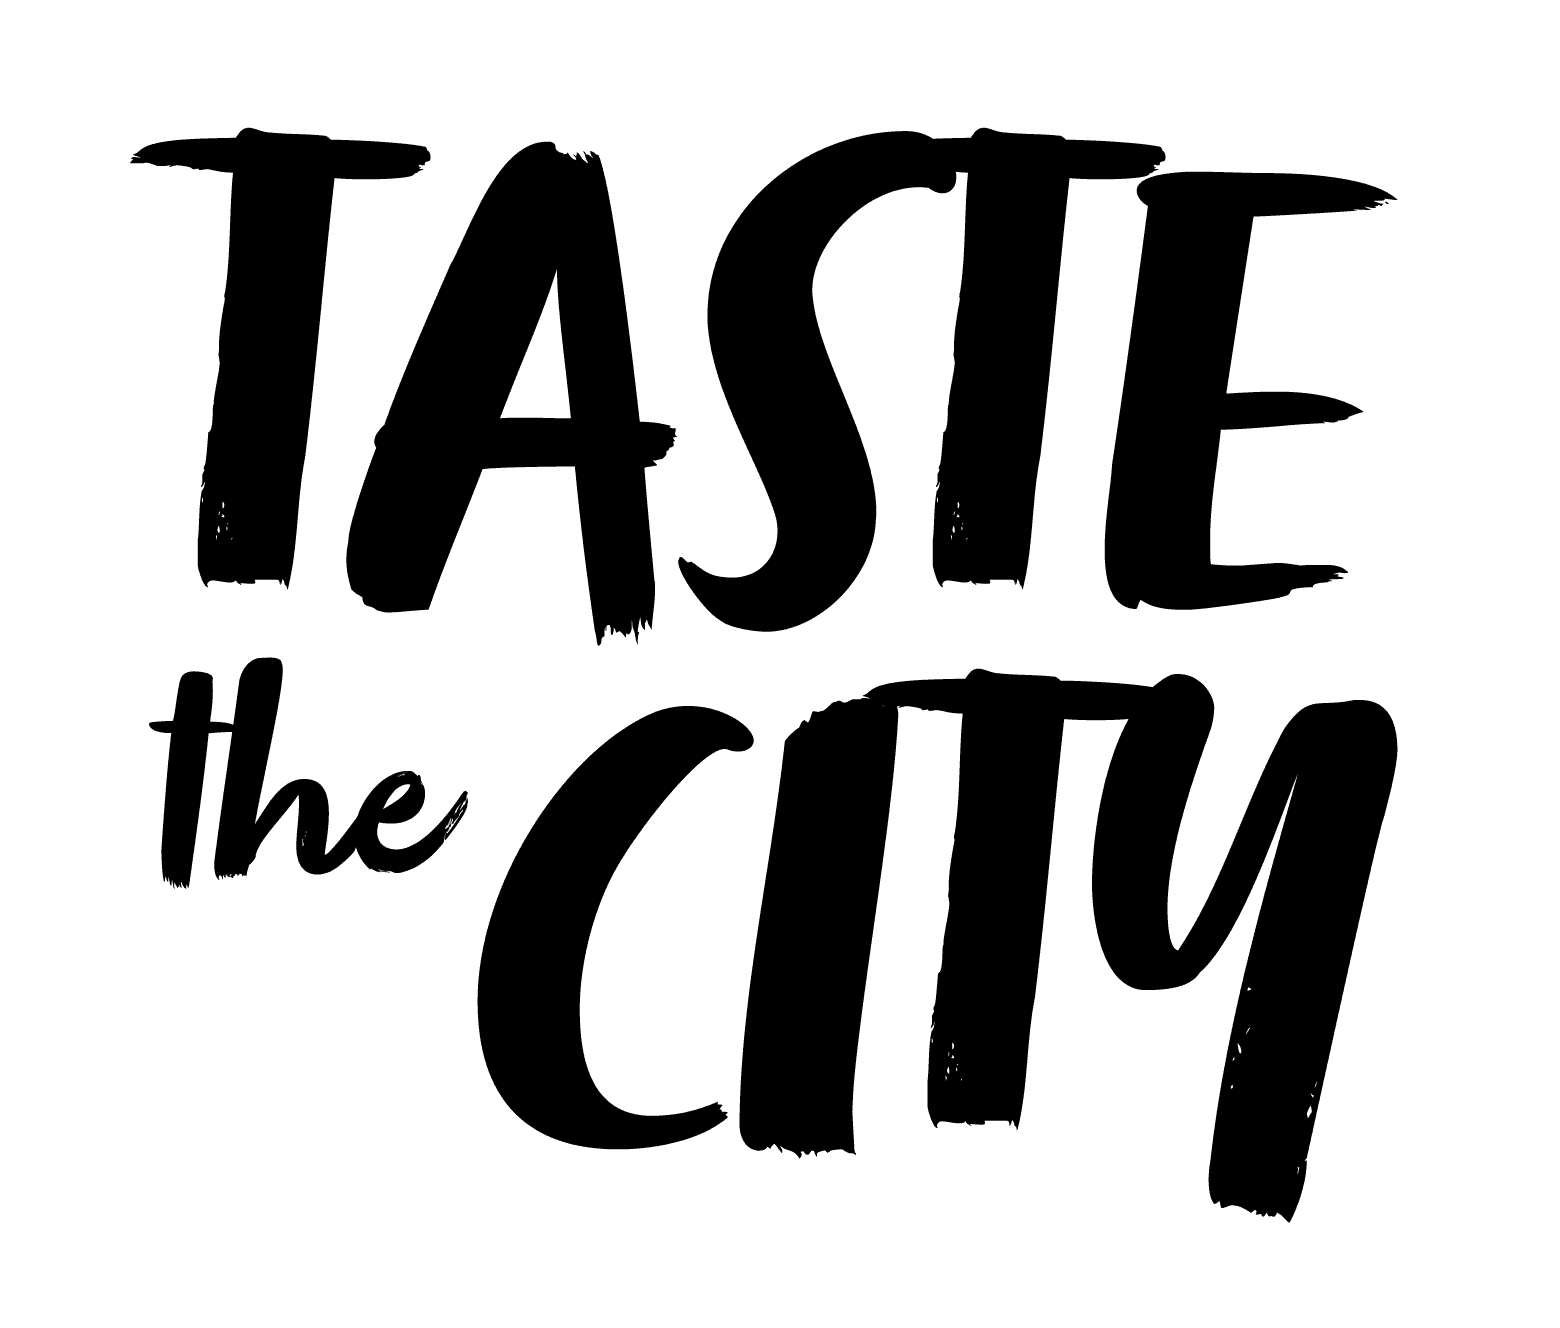 Taste the City